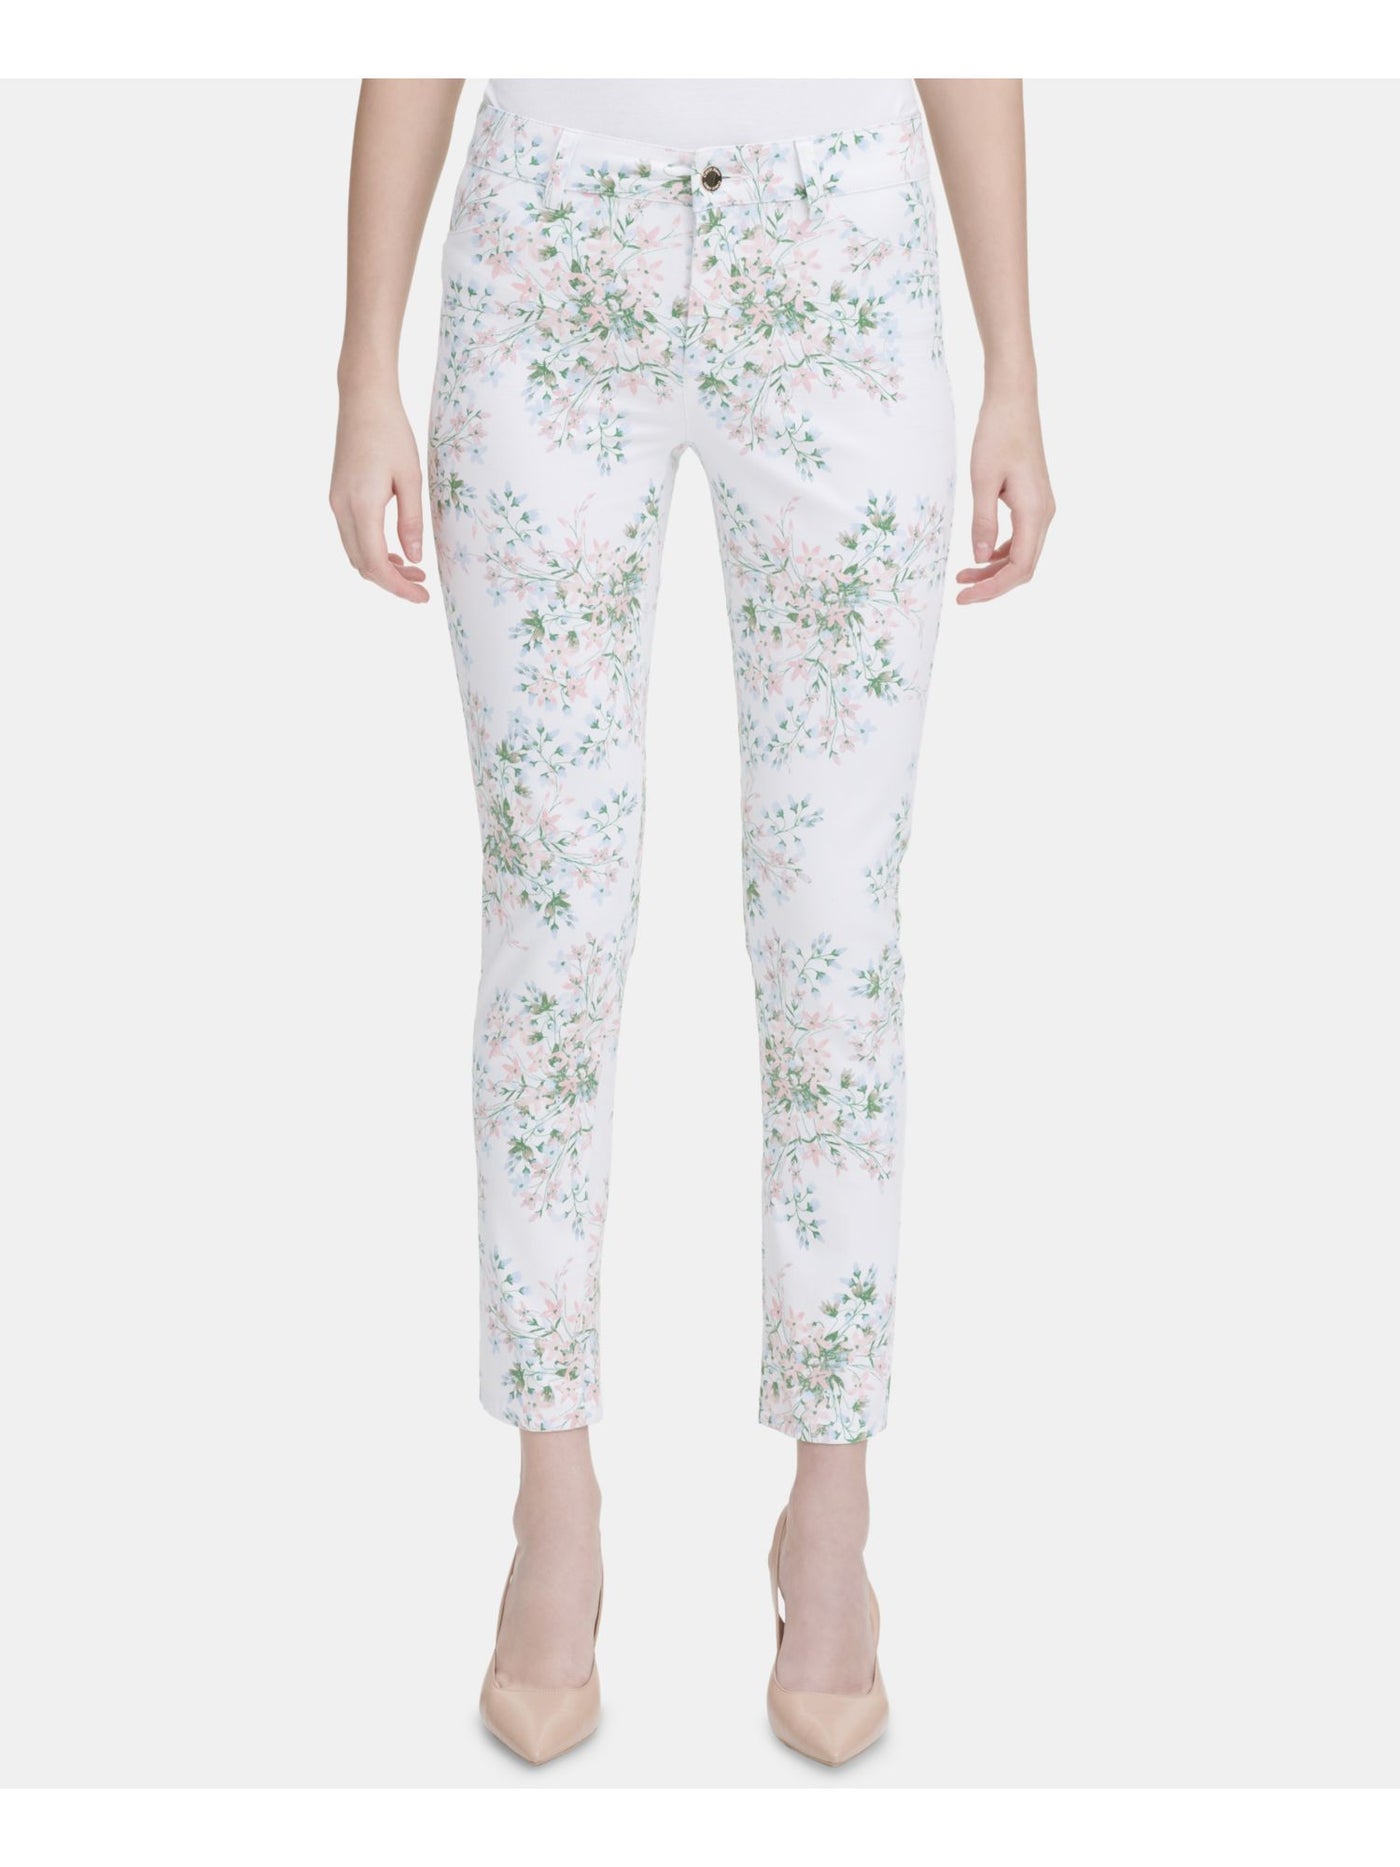 CALVIN KLEIN Womens White Floral Pants Size: 4